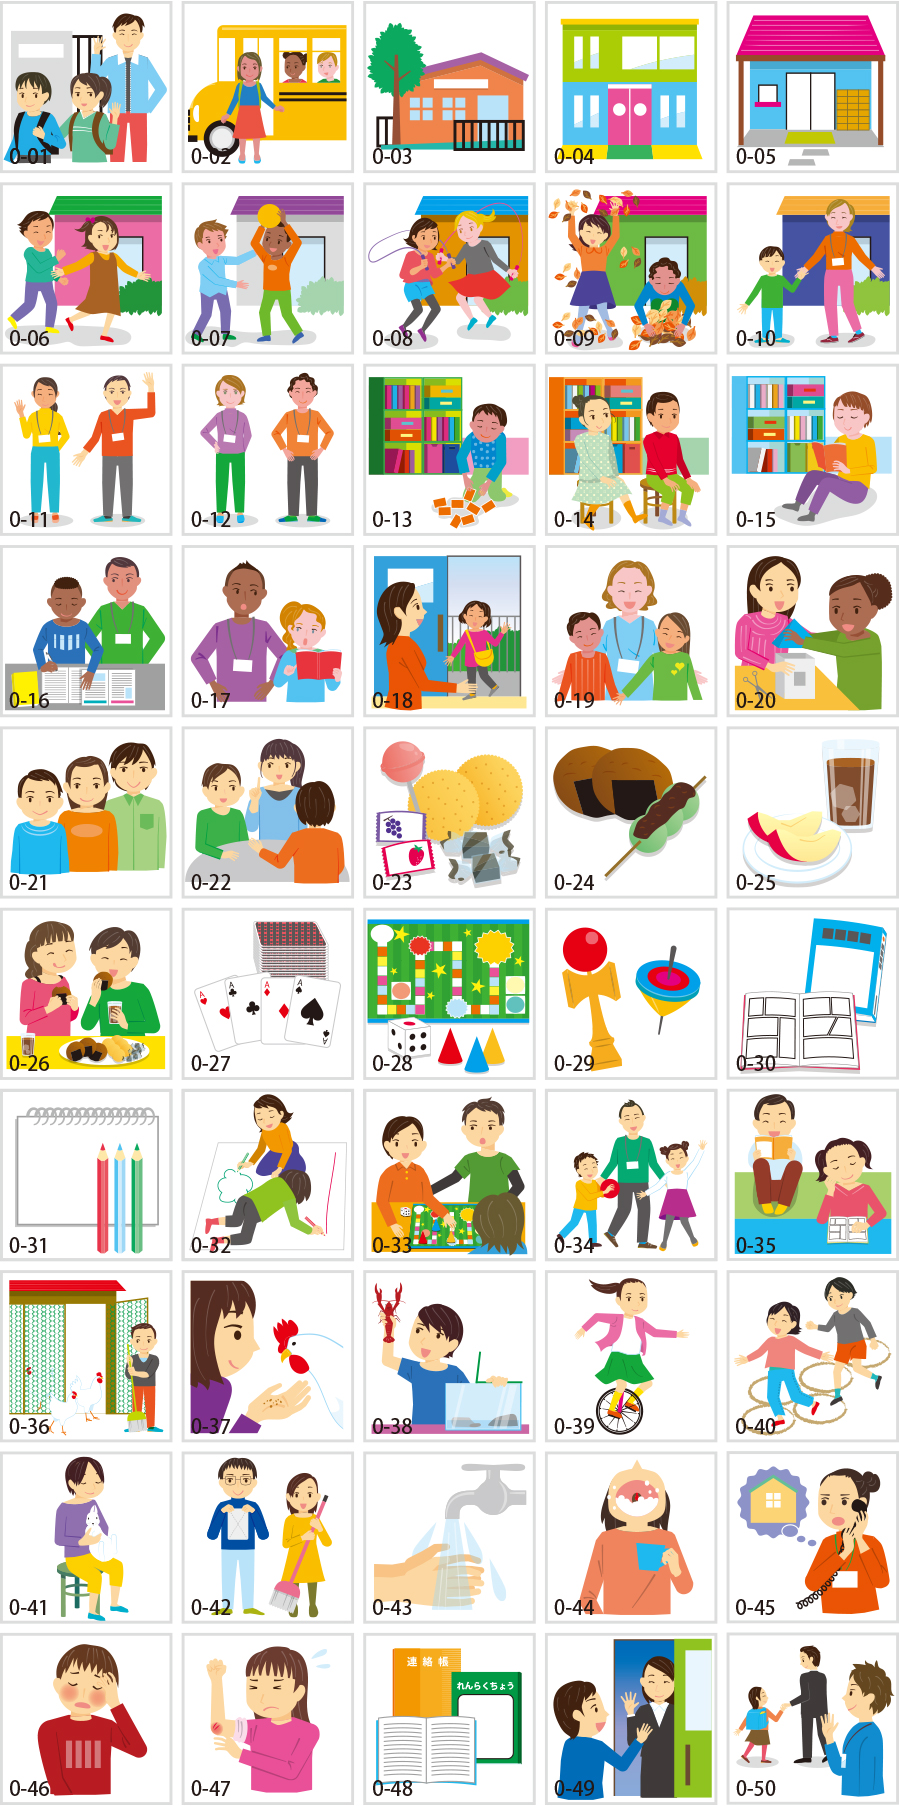 Illustrative material for school childcare